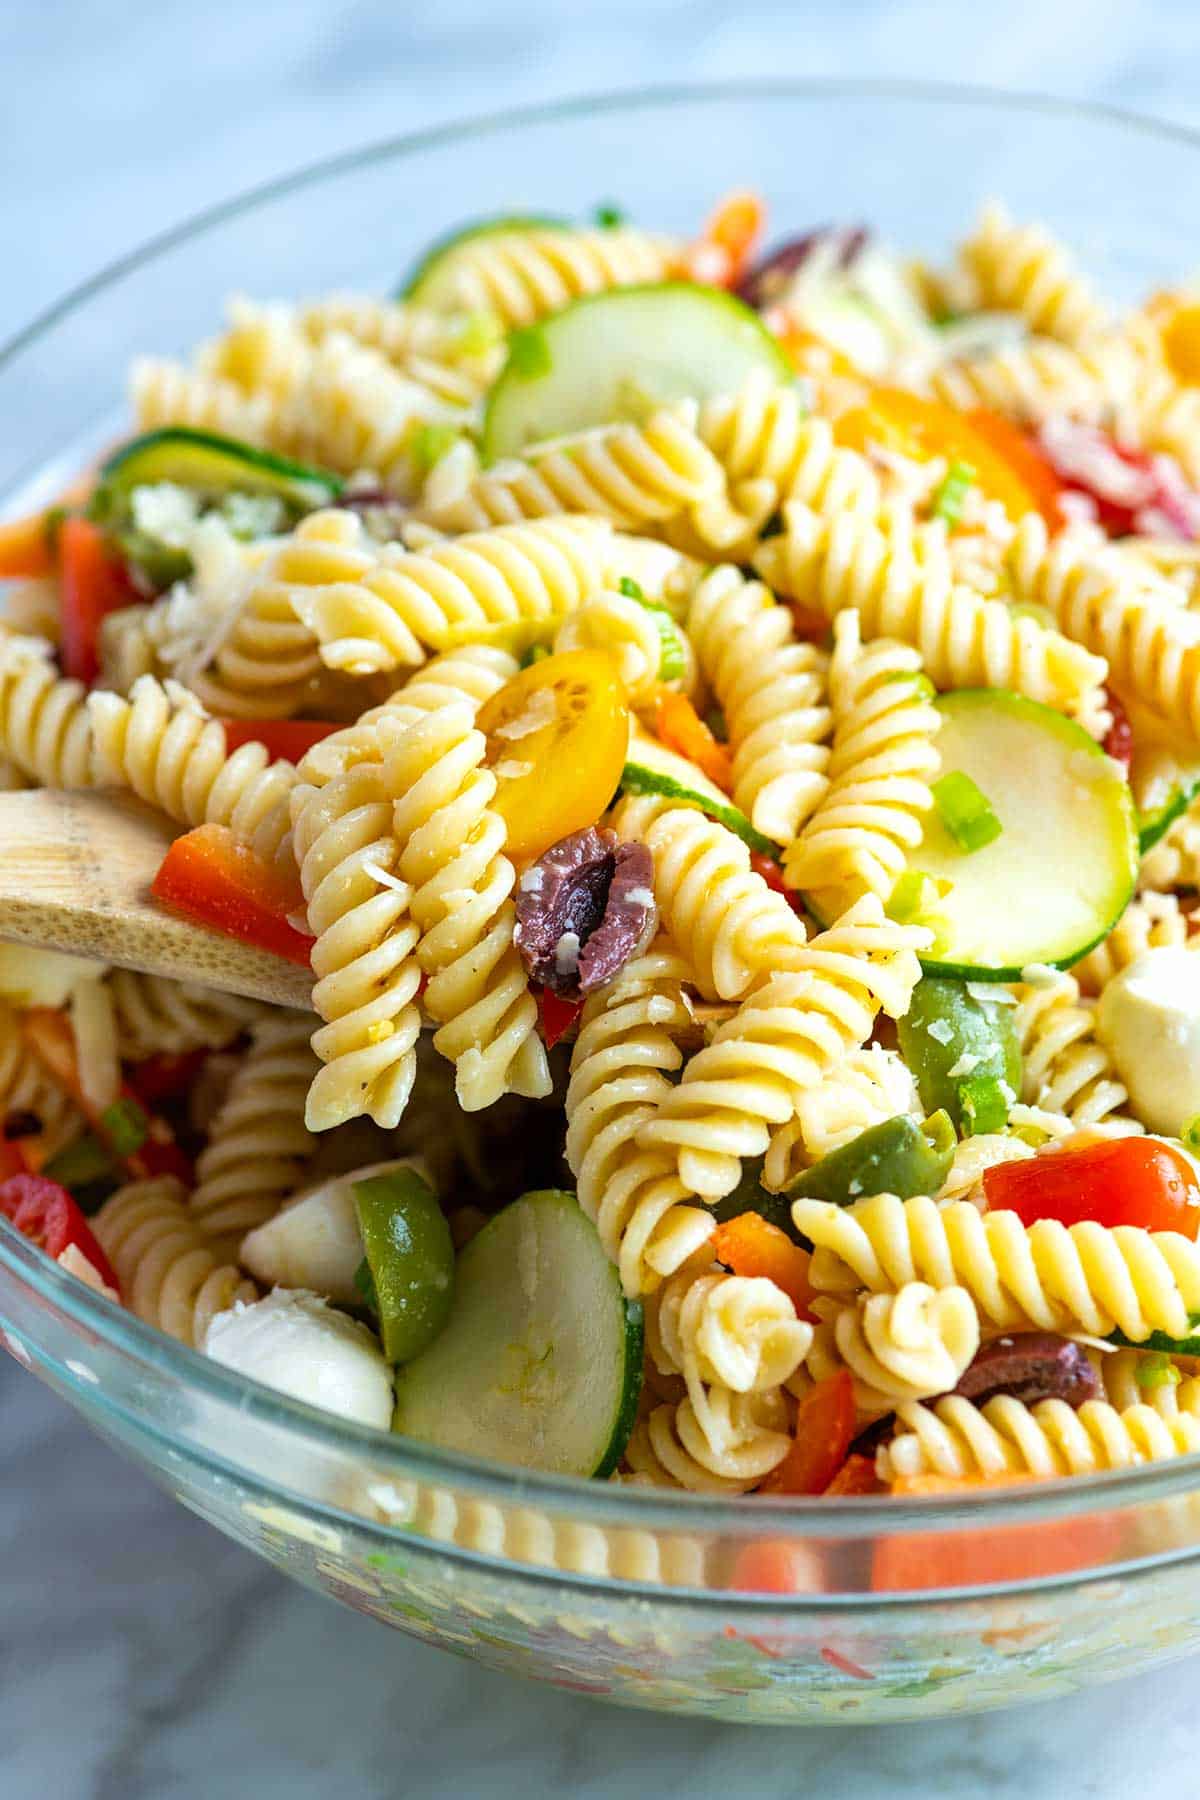 easy tasty pasta salad recipes Pasta salad easy delicious heart salads ...